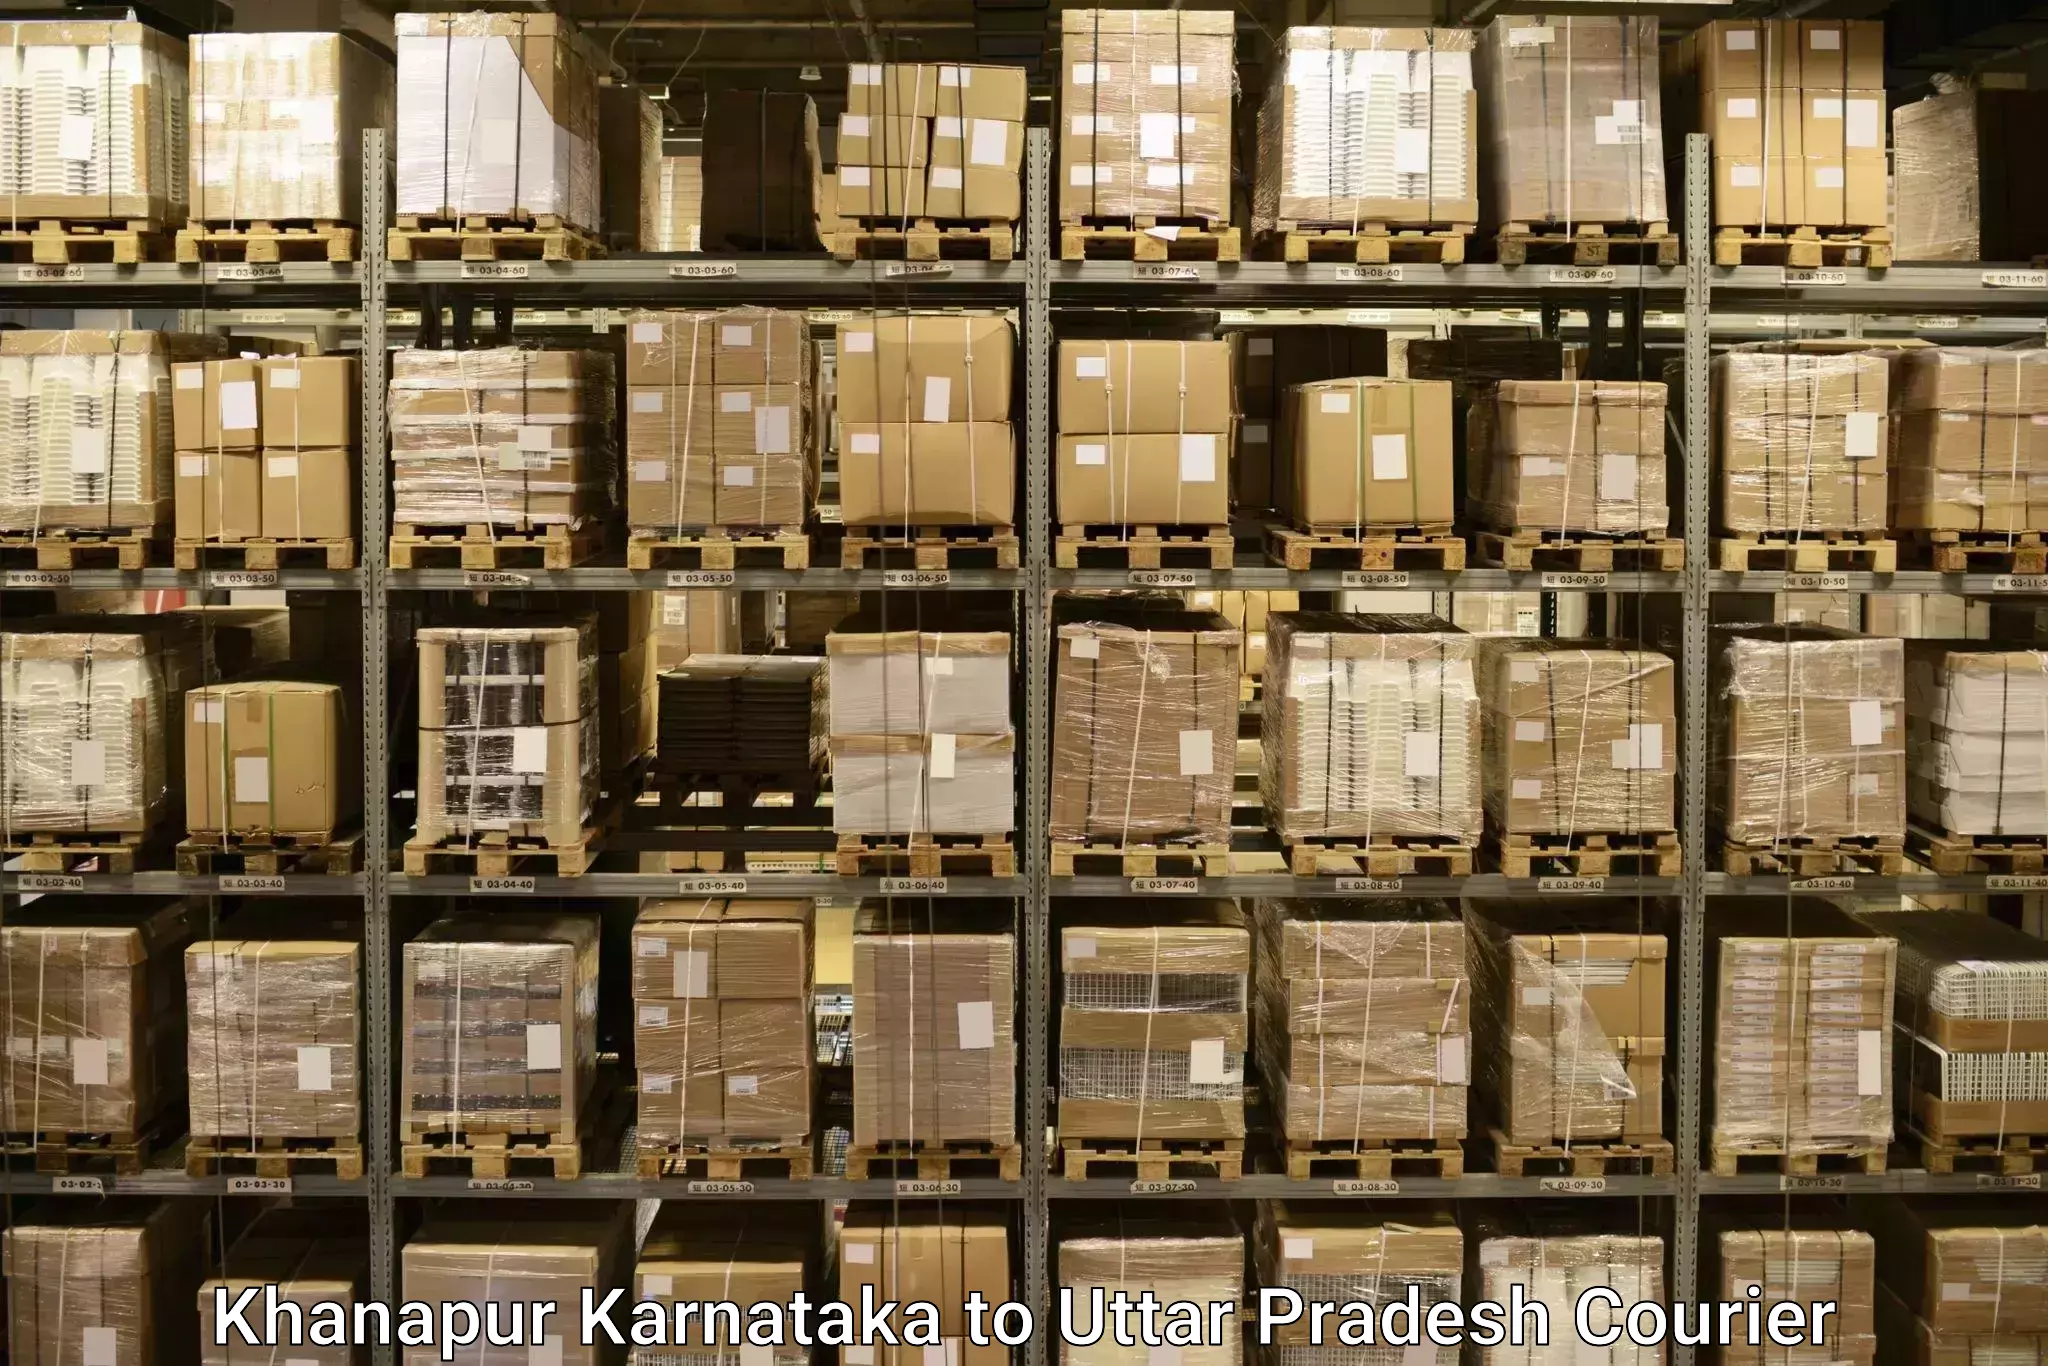 Luggage delivery network Khanapur Karnataka to Shahjahanpur